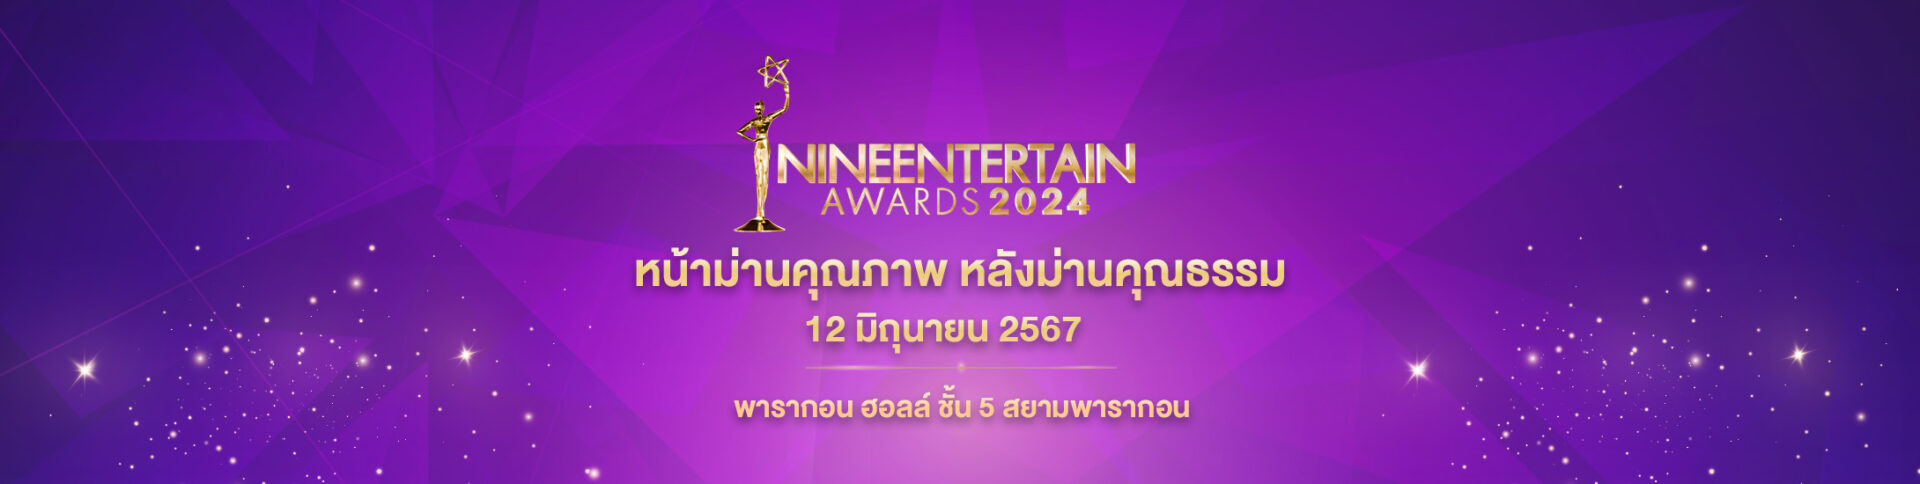 Nineentertain Awards 2024 Banner